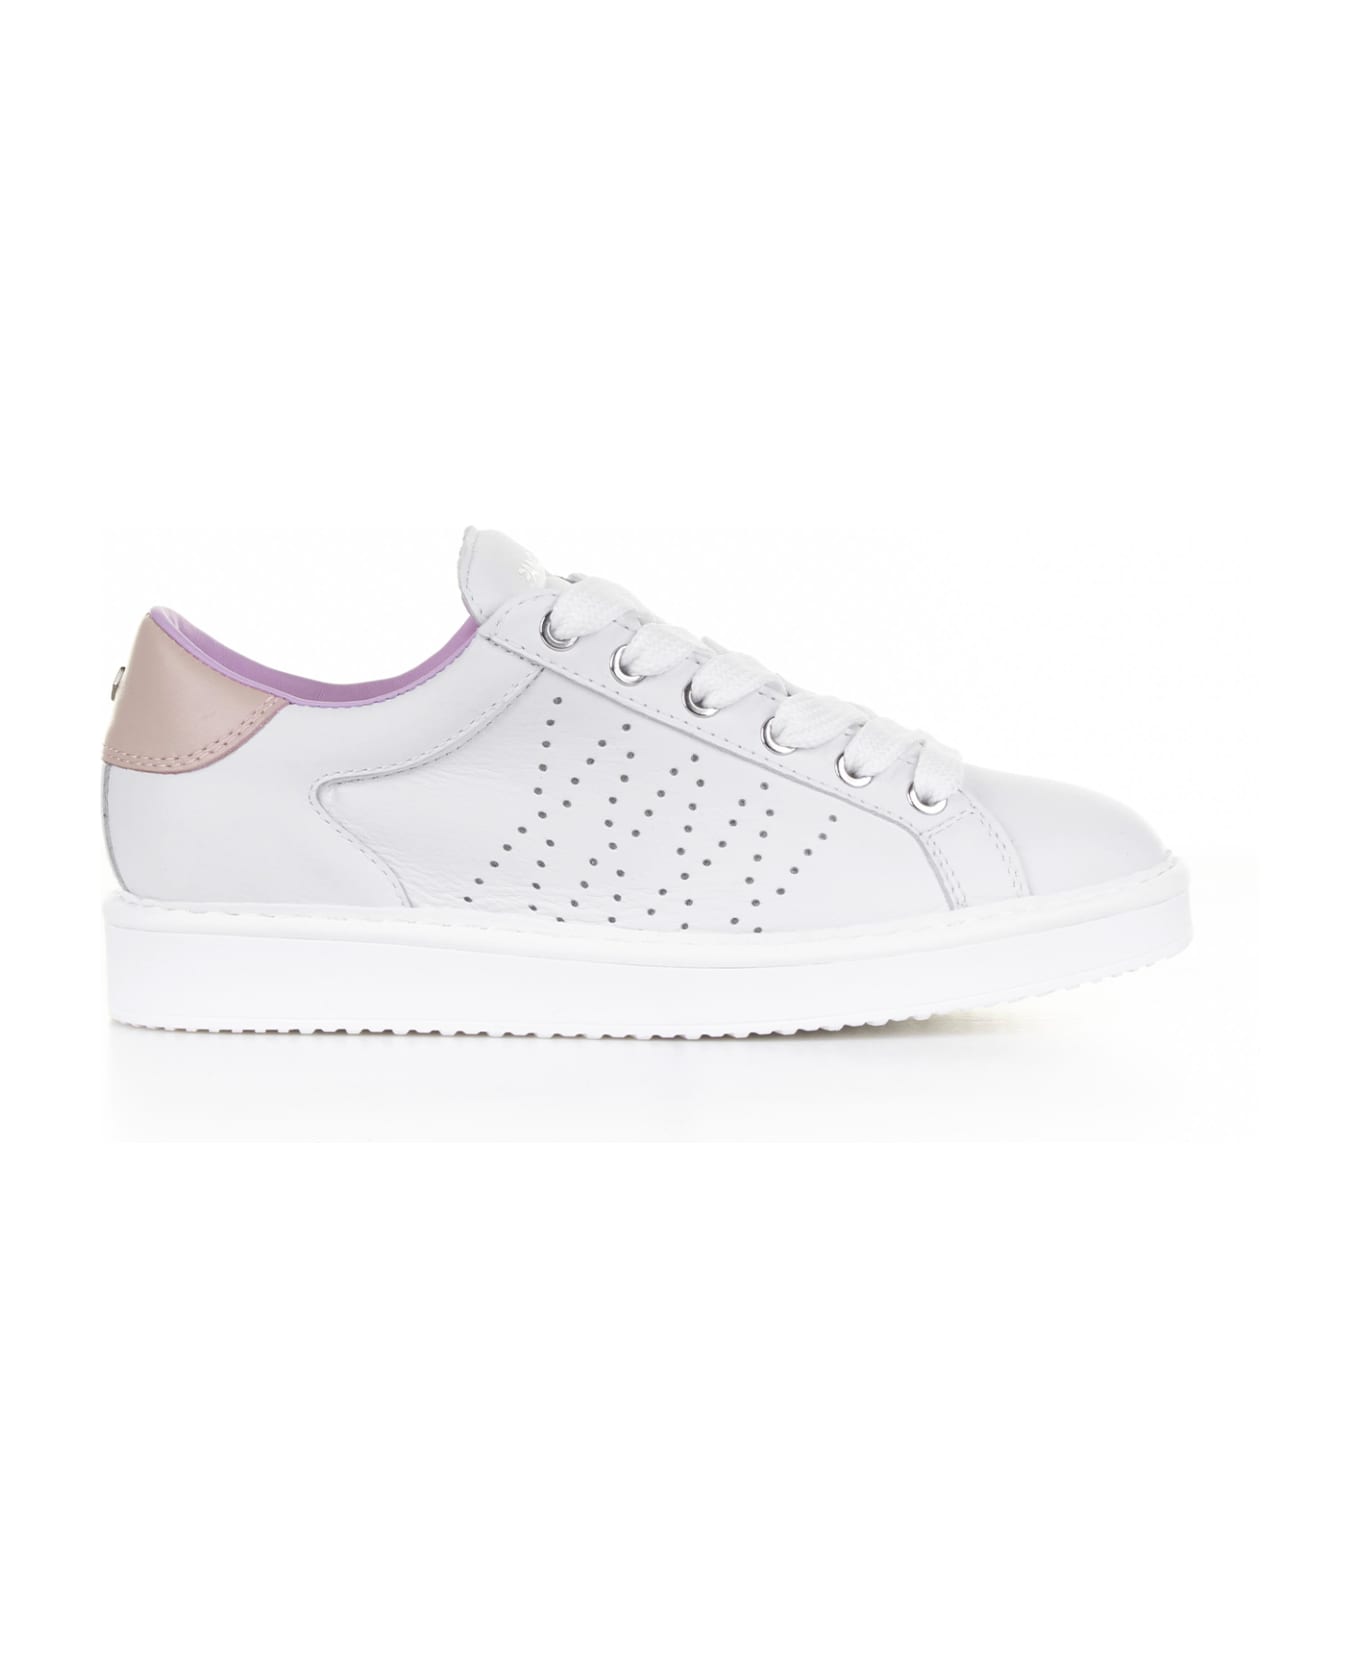 Panchic White Leather Sneaker And Pink Heel - WHITE-POWDER PINK スニーカー